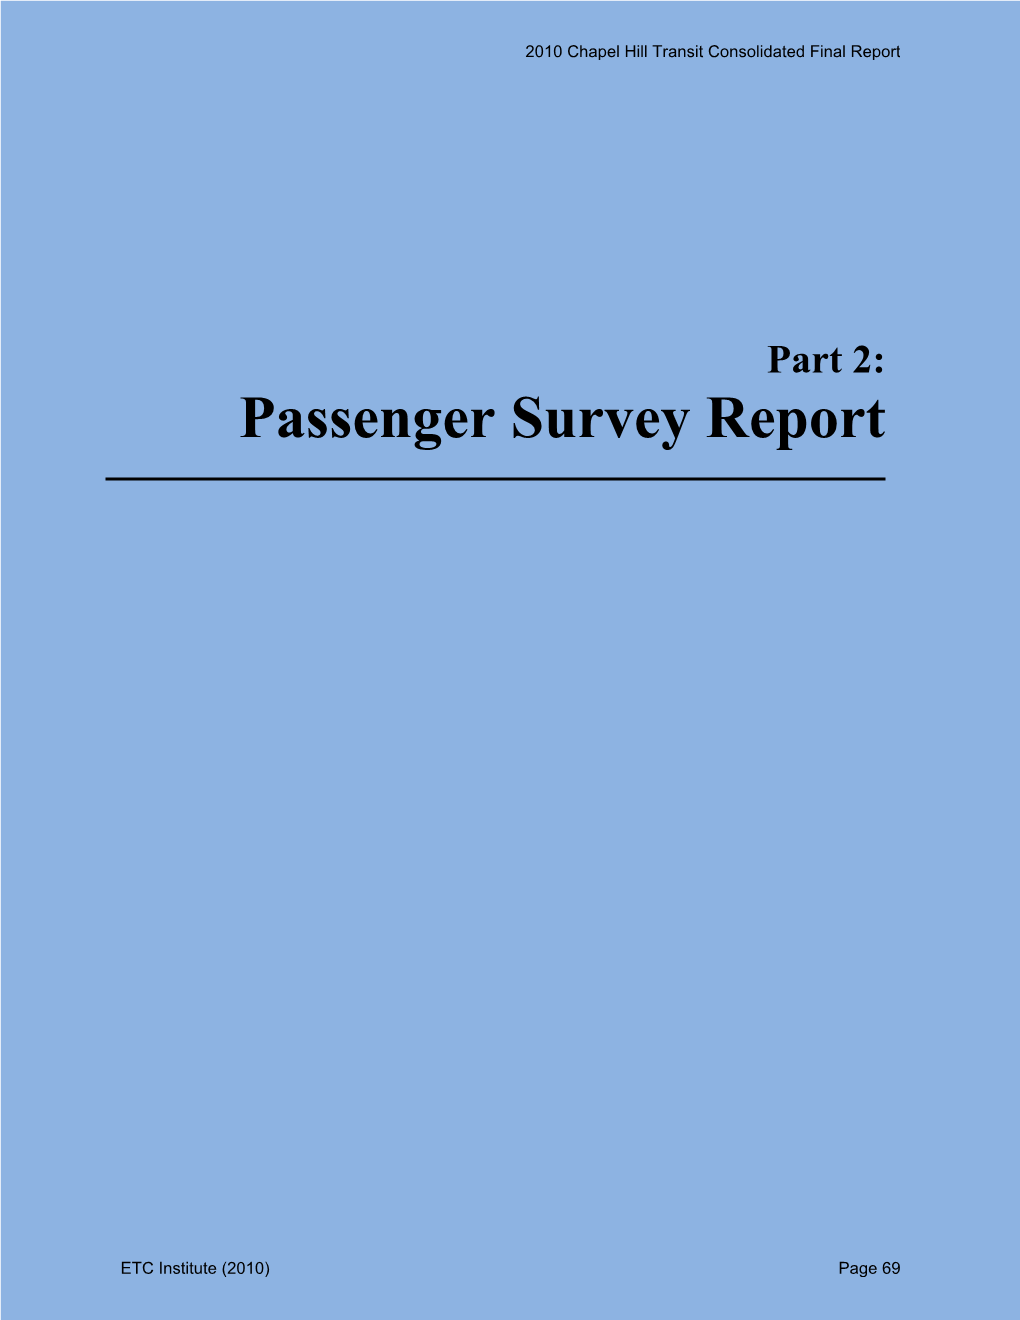 Passenger Survey Report